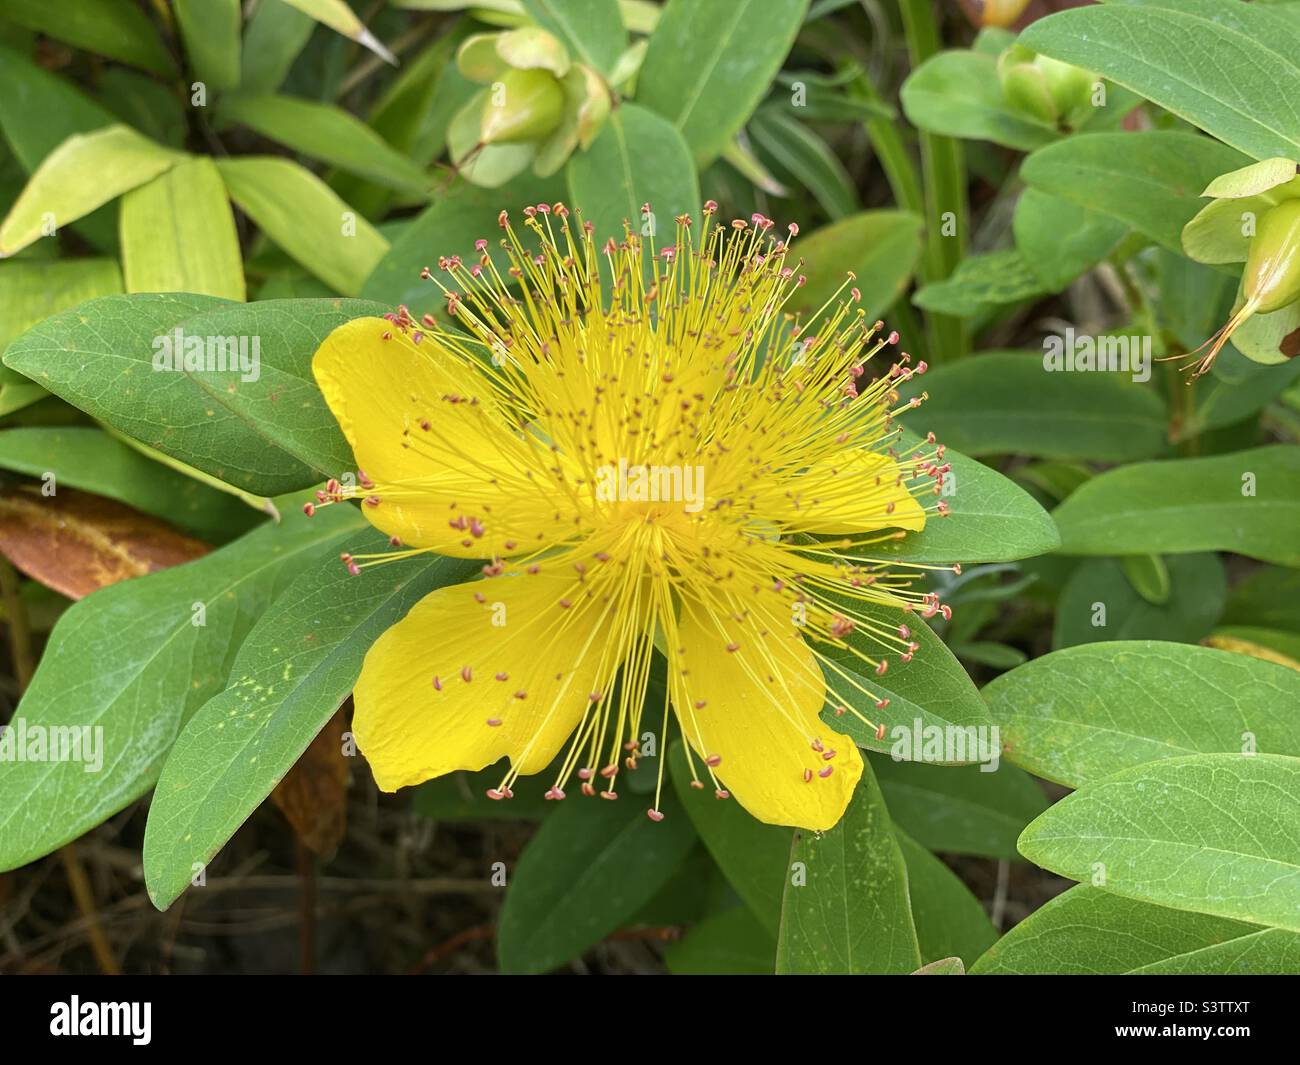 Rose of Sharon, St Johns Wart yellow flower Stock Photo